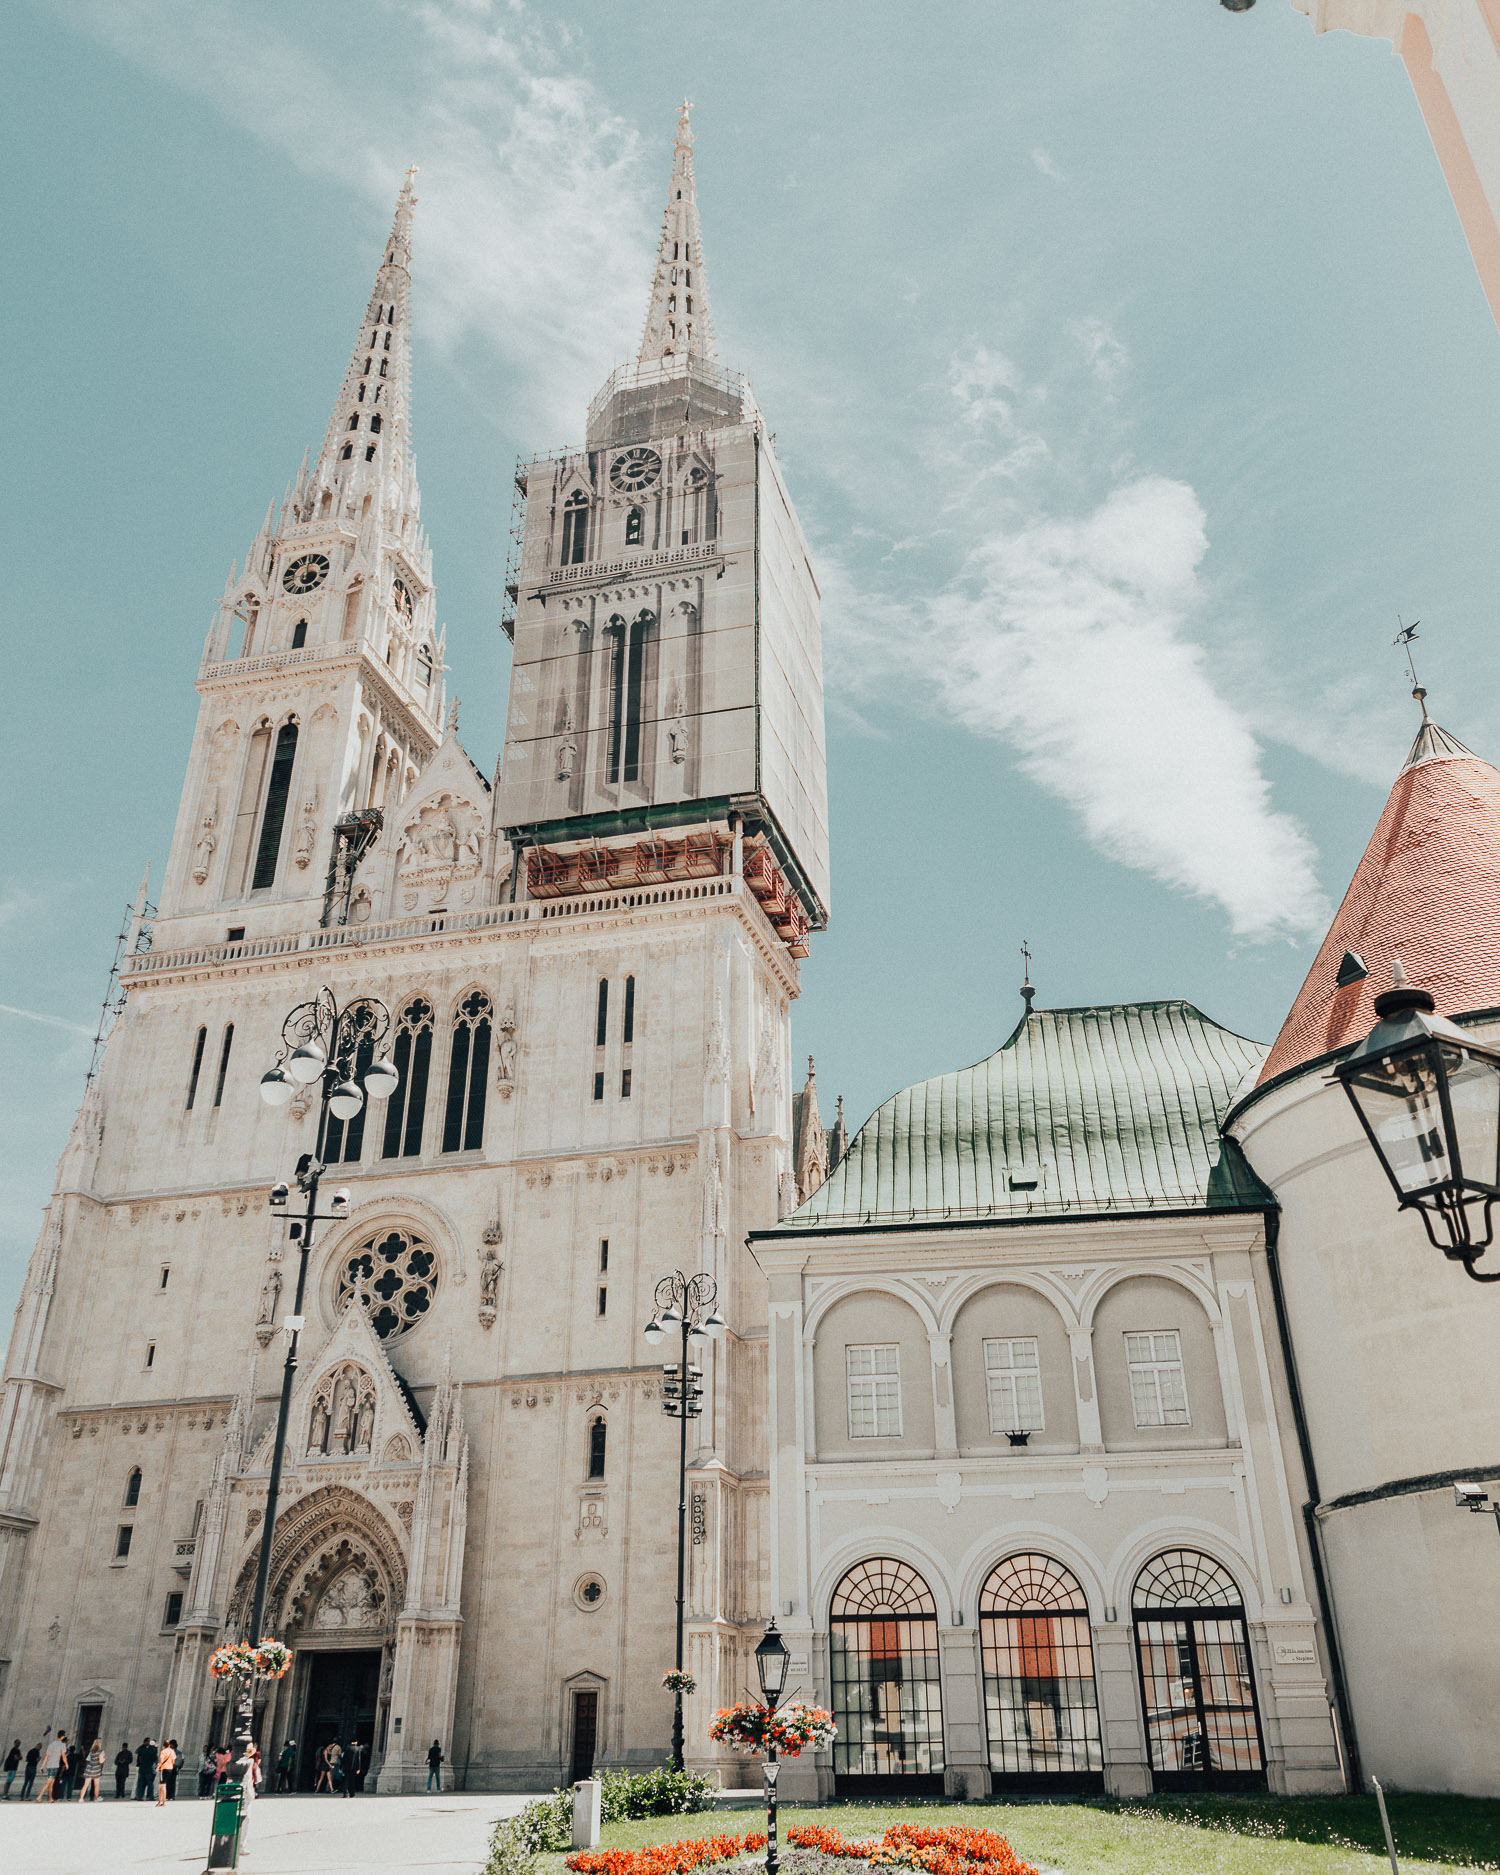 Zagreb Cathedral in Croatia